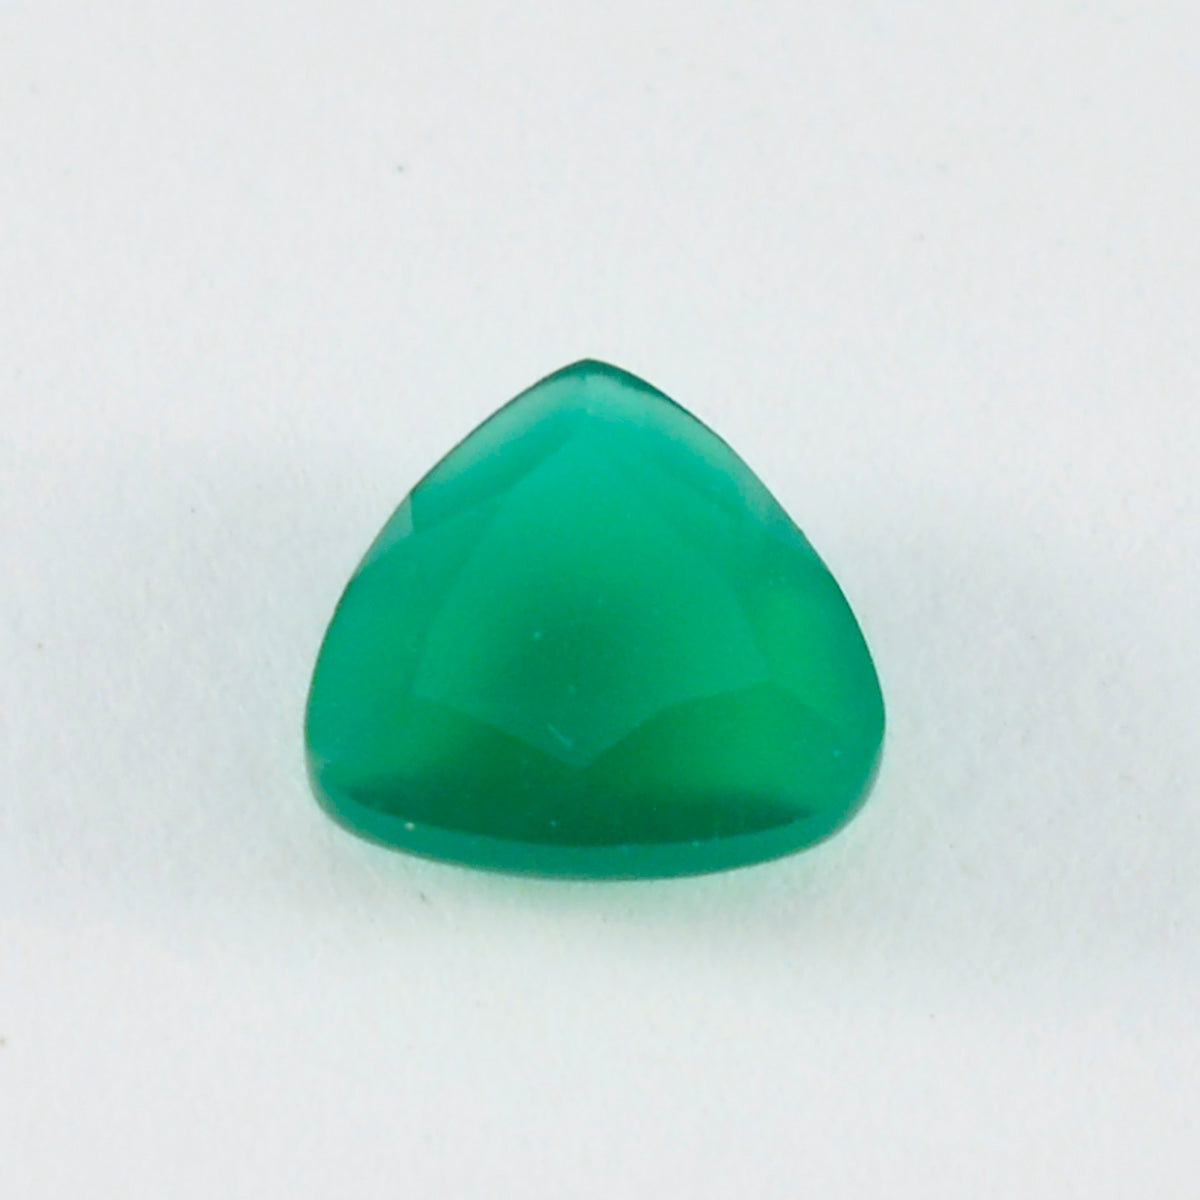 Riyogems 1PC Real Green Onyx Faceted 13x13 mm Trillion Shape amazing Quality Loose Stone